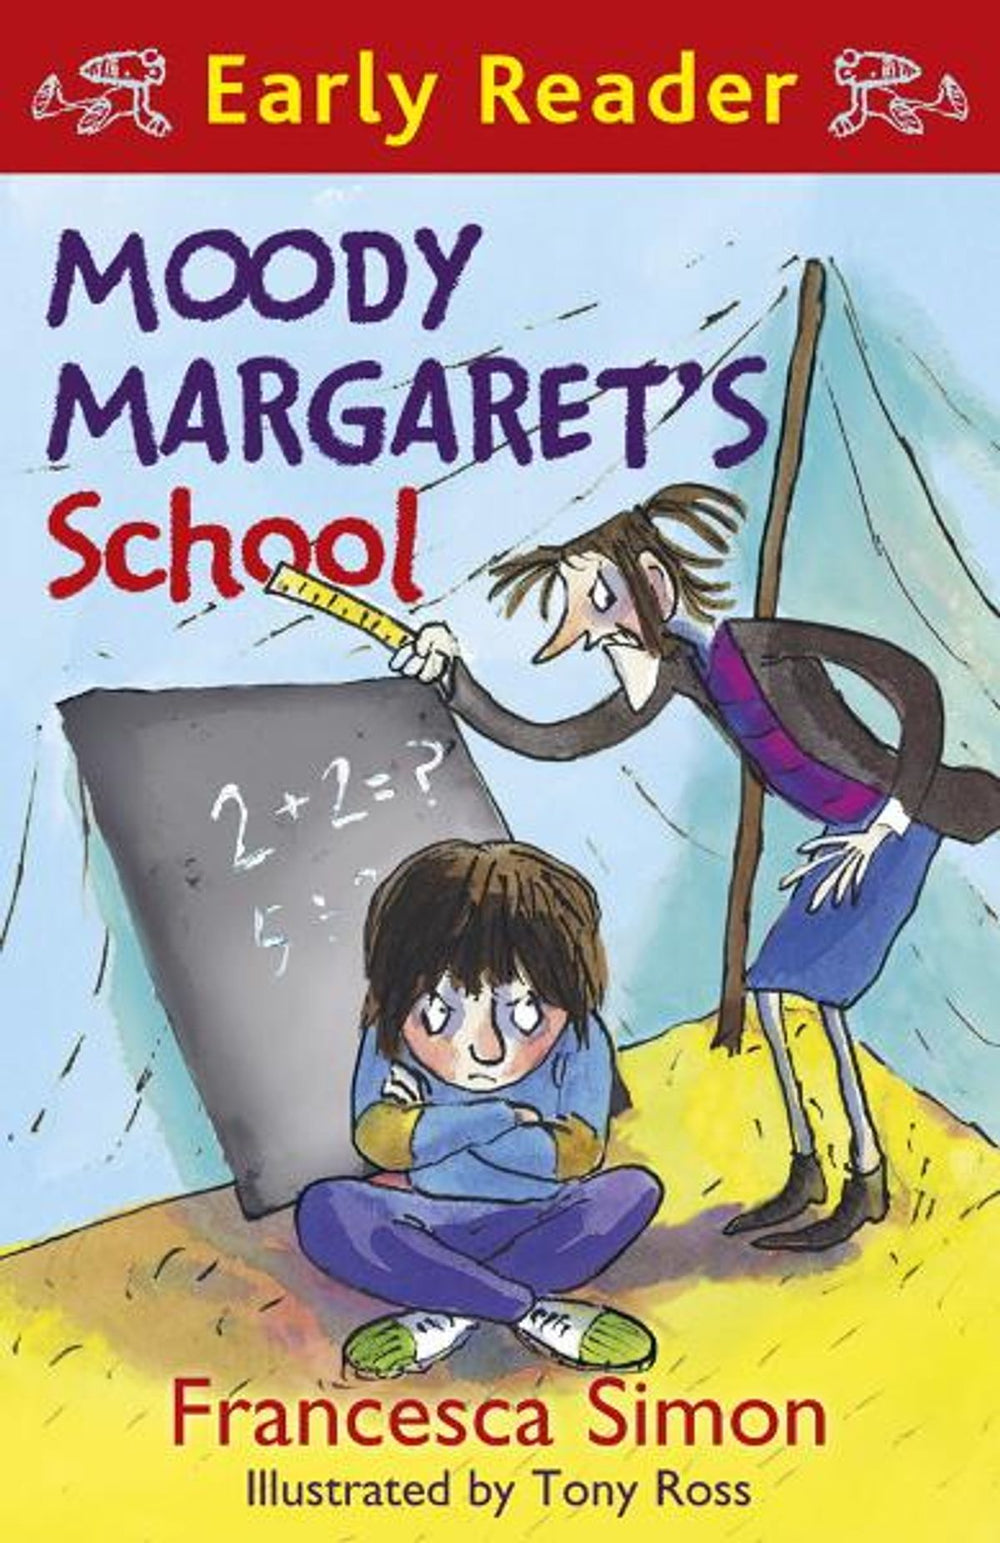 Moody Margaret's School by Francesca Simon   - an Early Reader Book